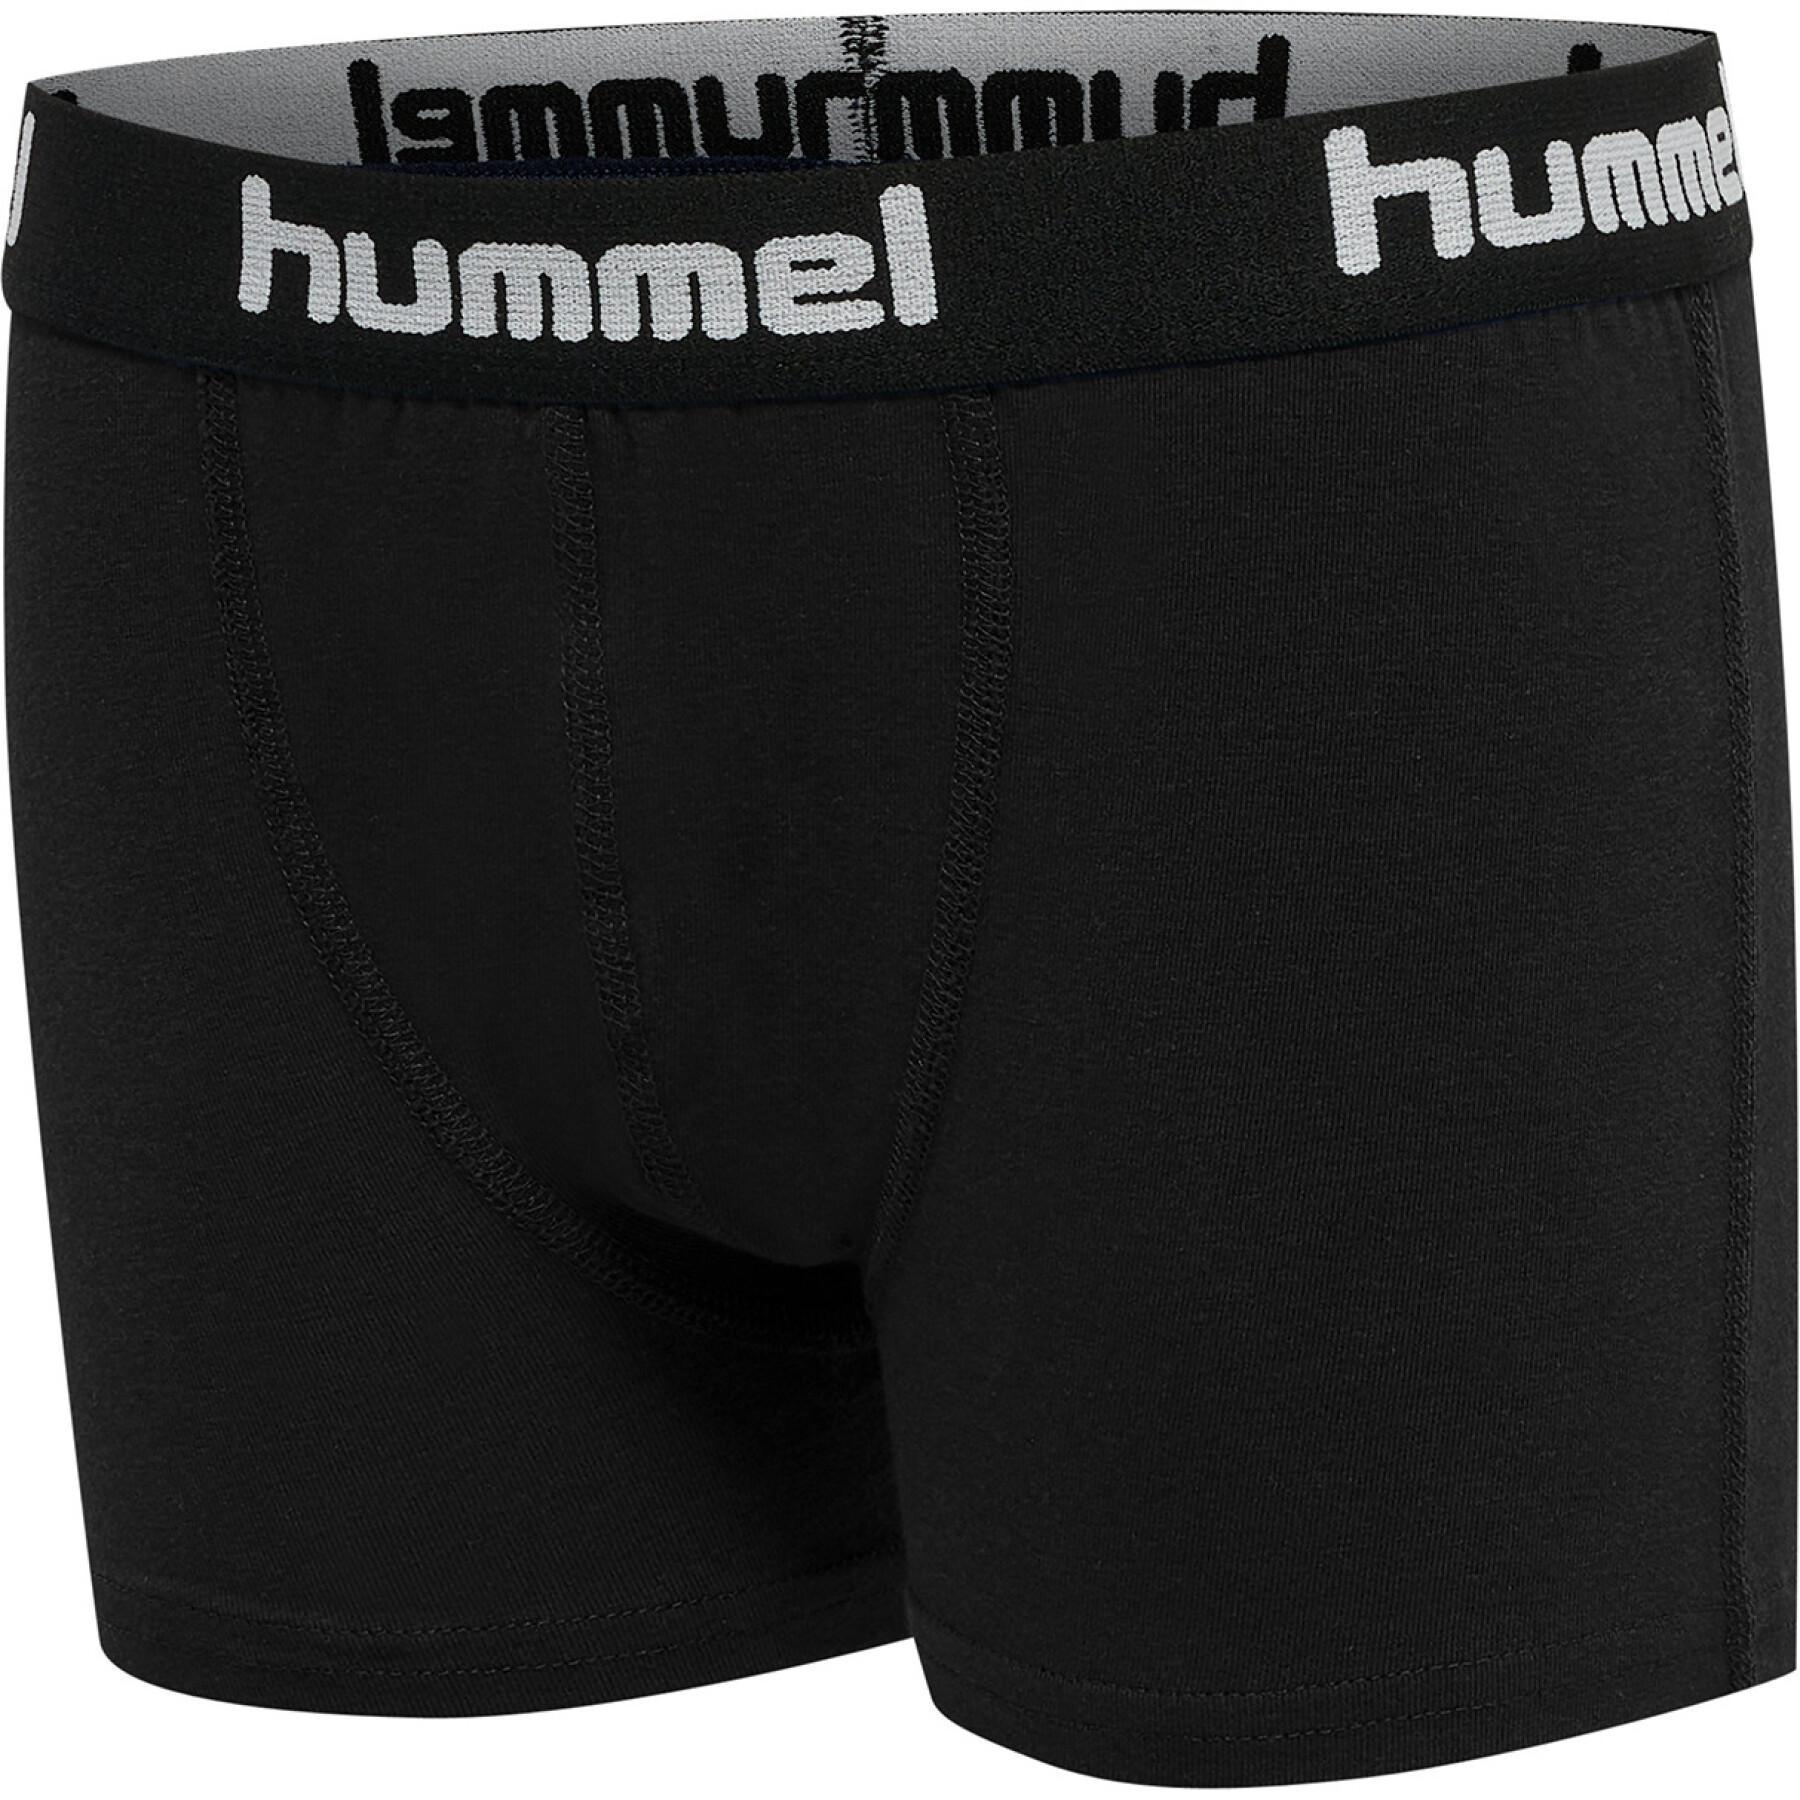 Boxershorts Kind Hummel hmlNOLAN (x2)